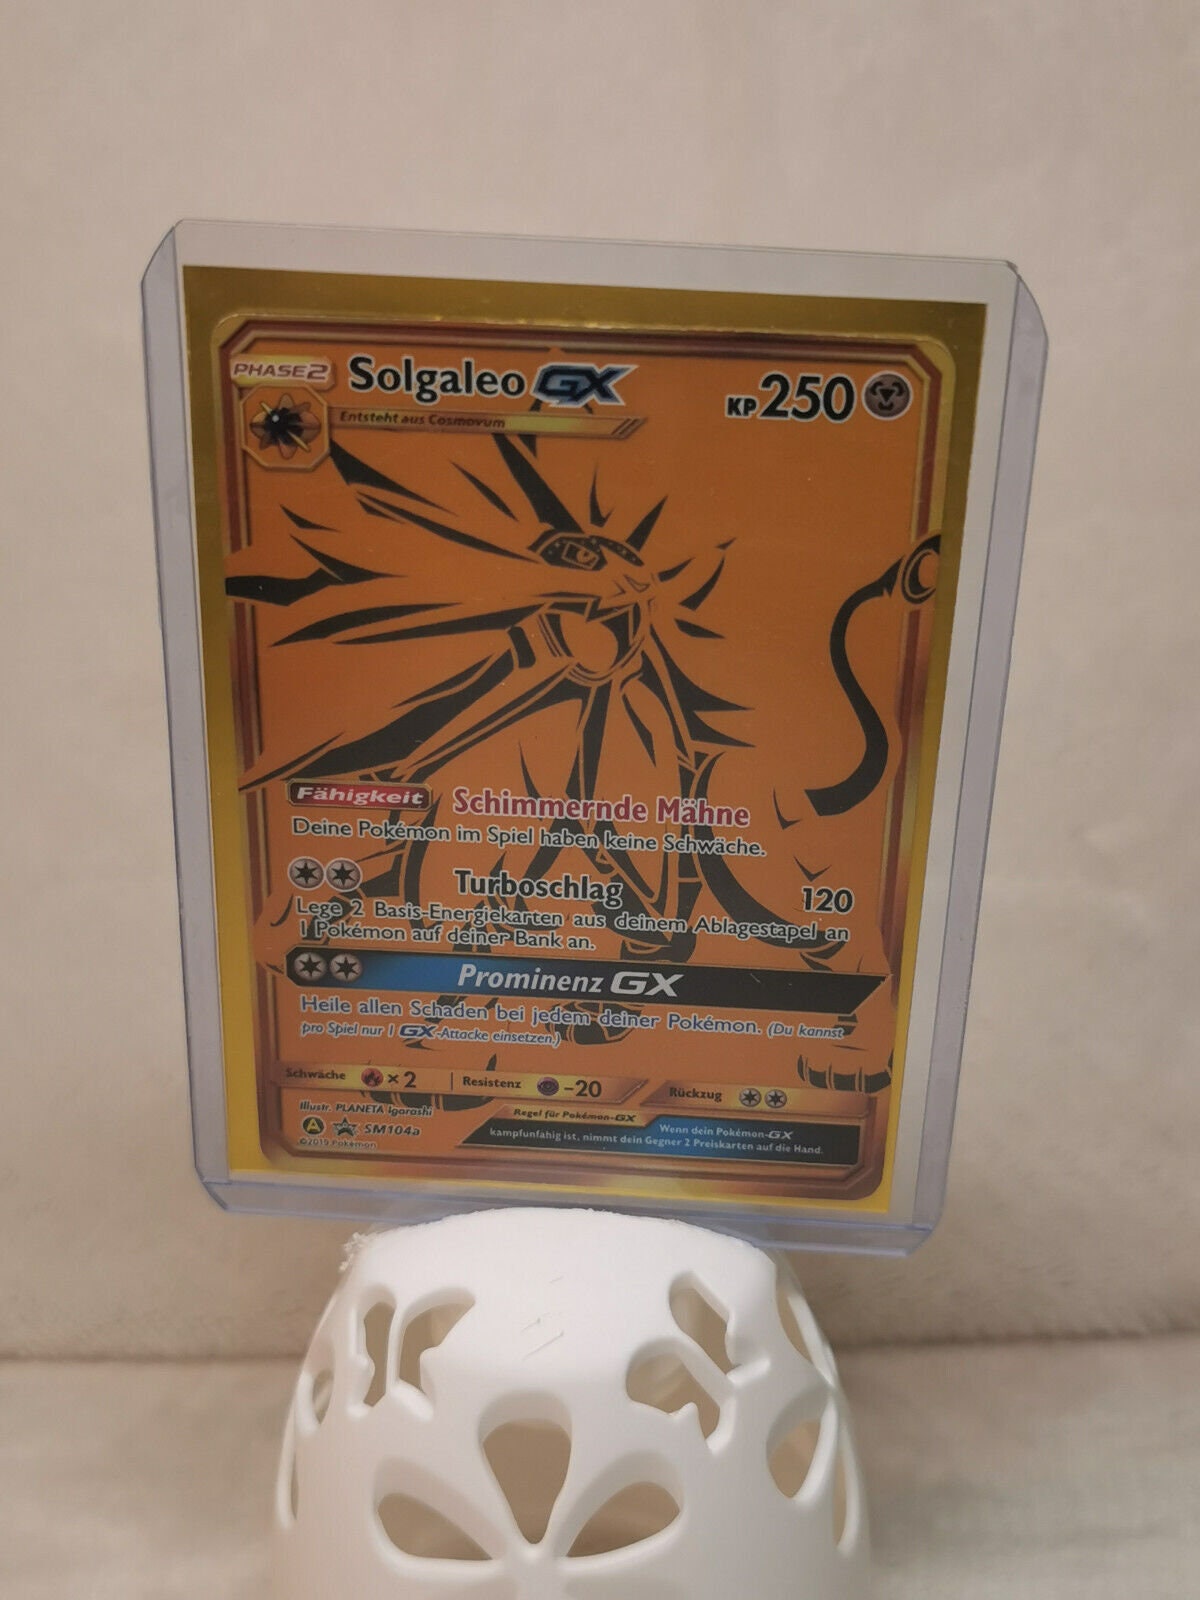 2021 Pokémon Toxel shining fates ultra rare holo card! - Card Games, Facebook Marketplace